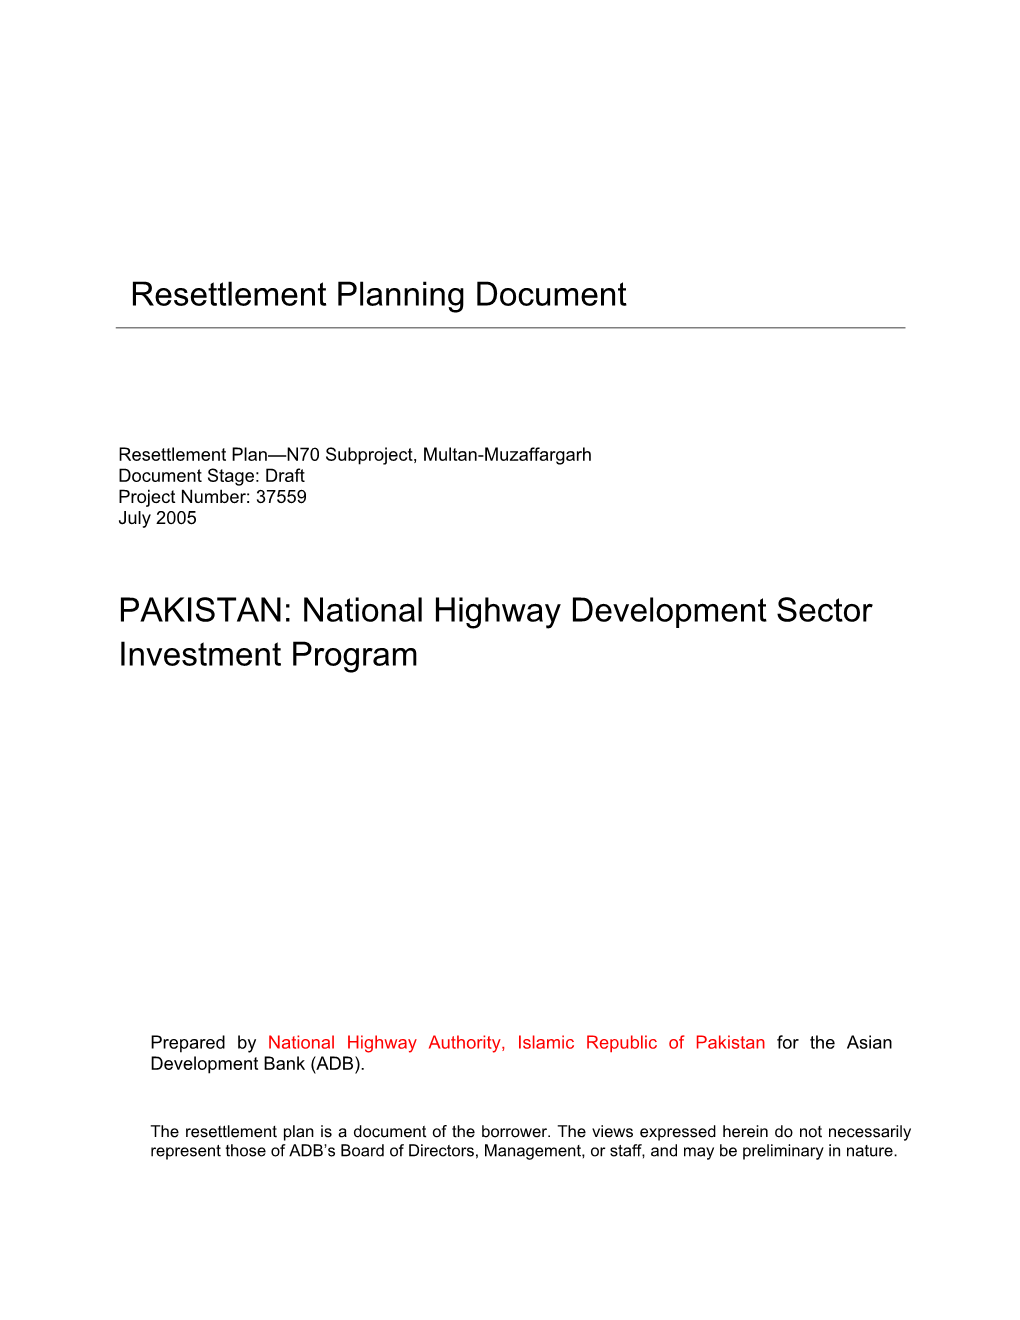 PAKISTAN: National Highway Development Sector Investment Program